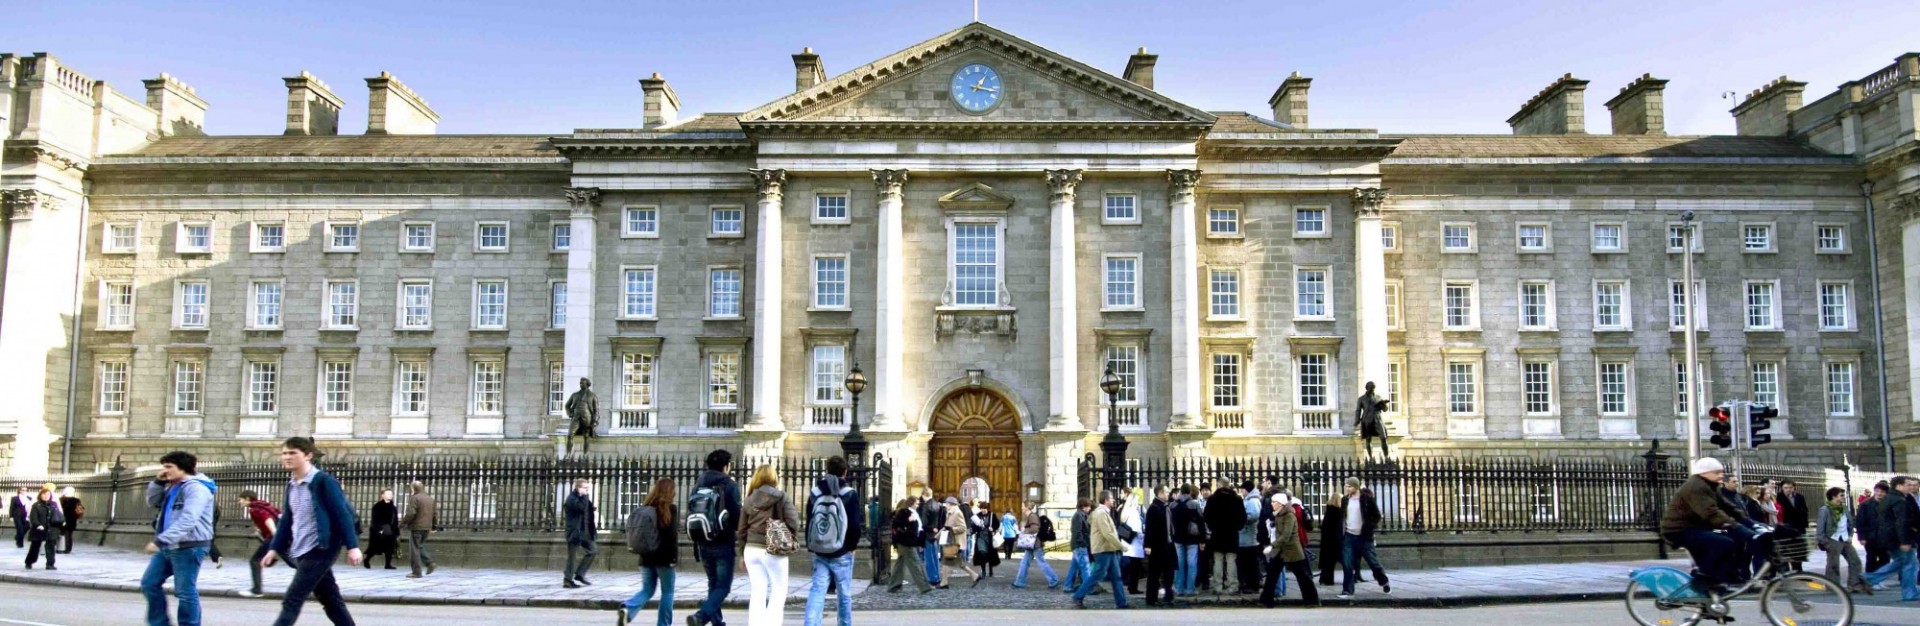 Trinity College Dublin campus building